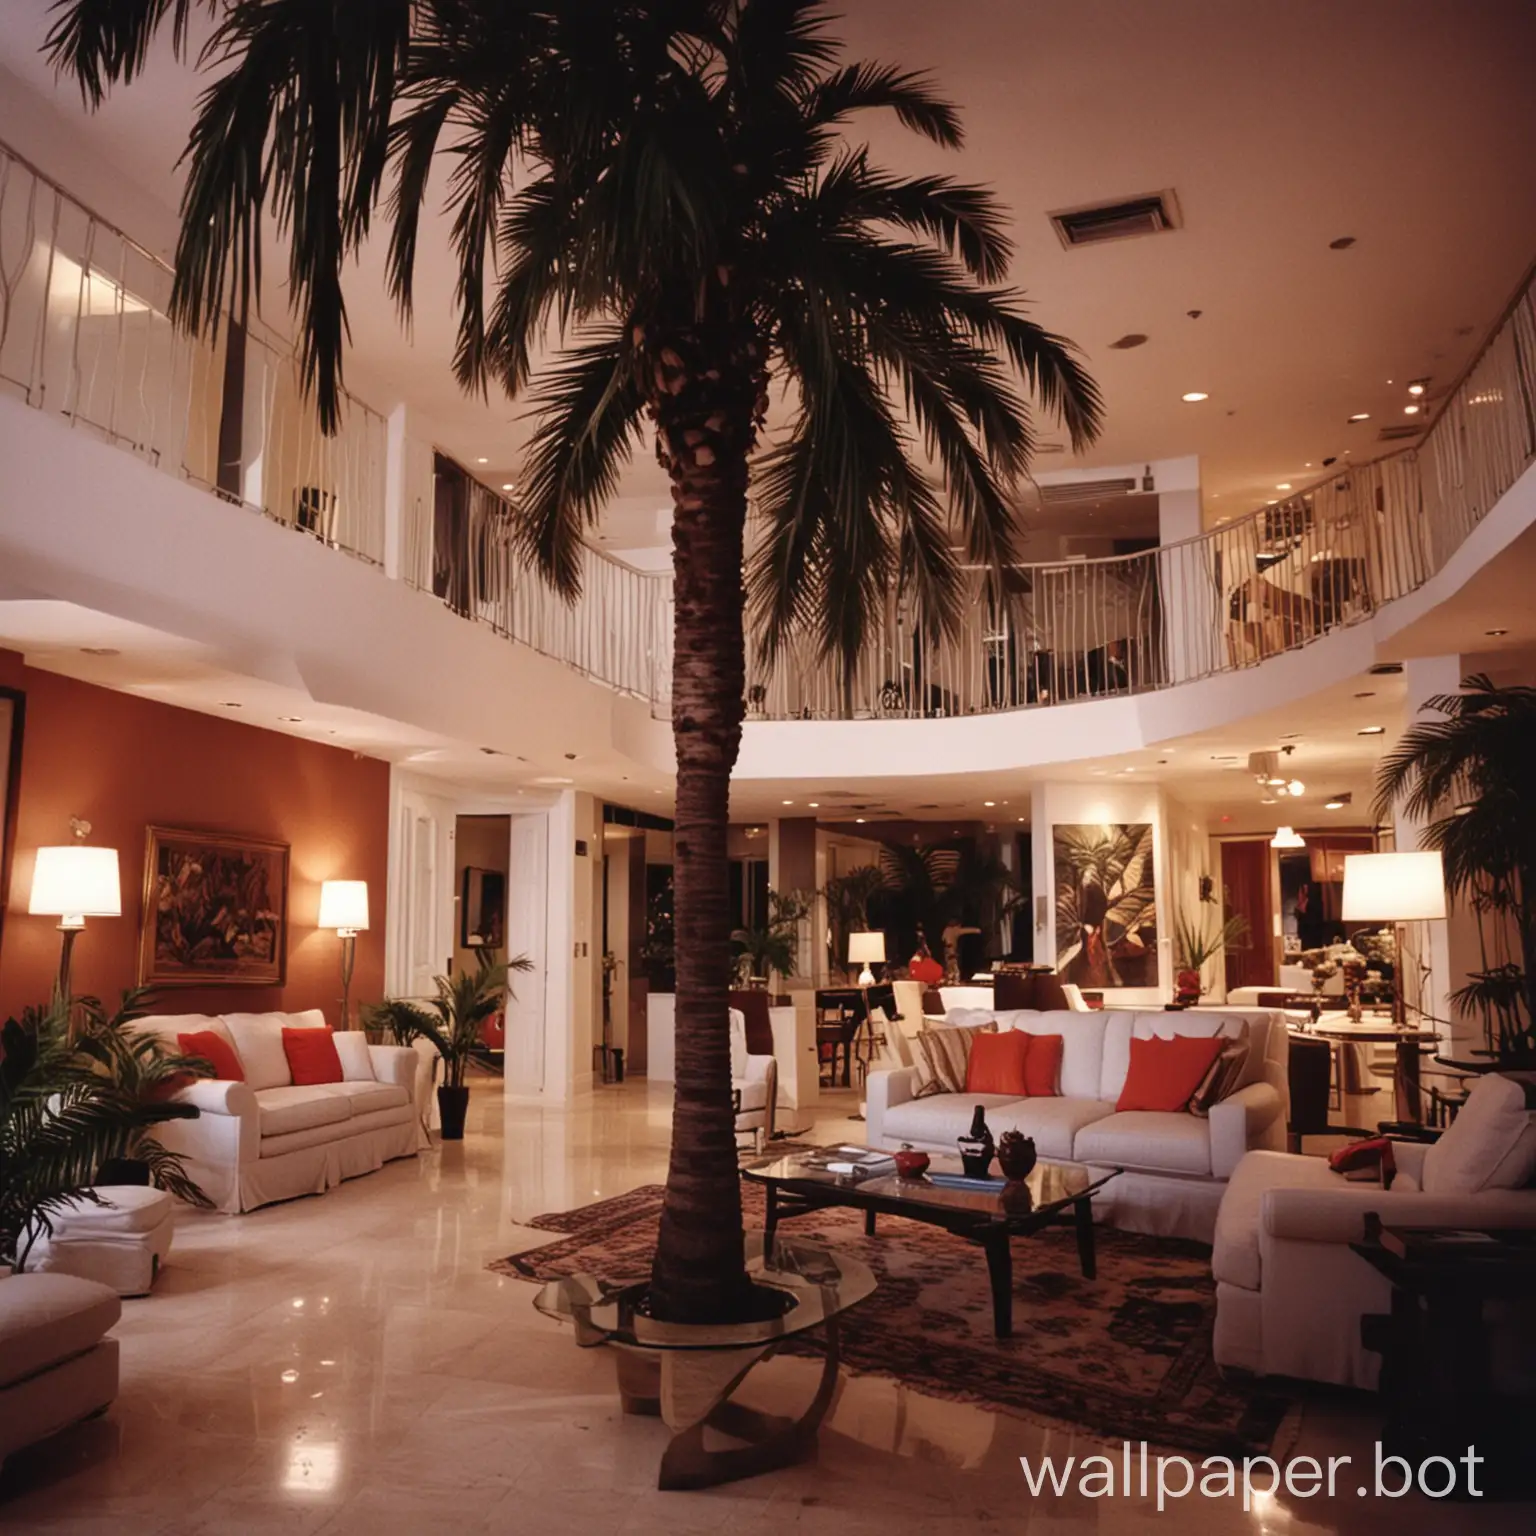 Luxurious-1980s-Miami-Condominium-Interior-with-Dark-Palm-Tree